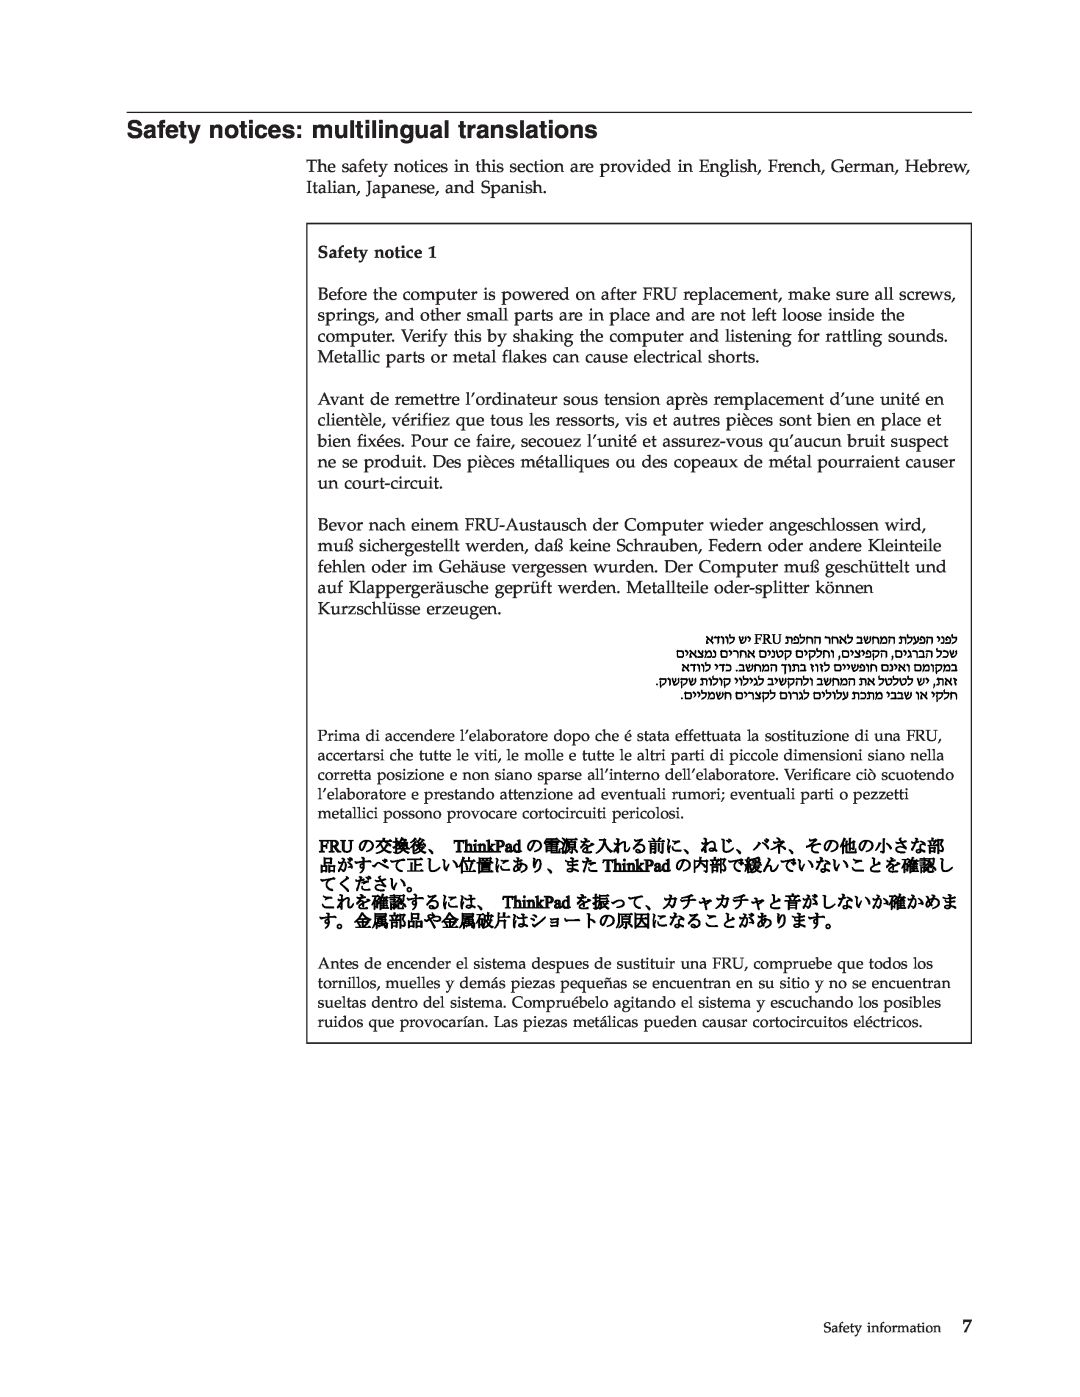 Lenovo SL300 manual Safety notices multilingual translations 